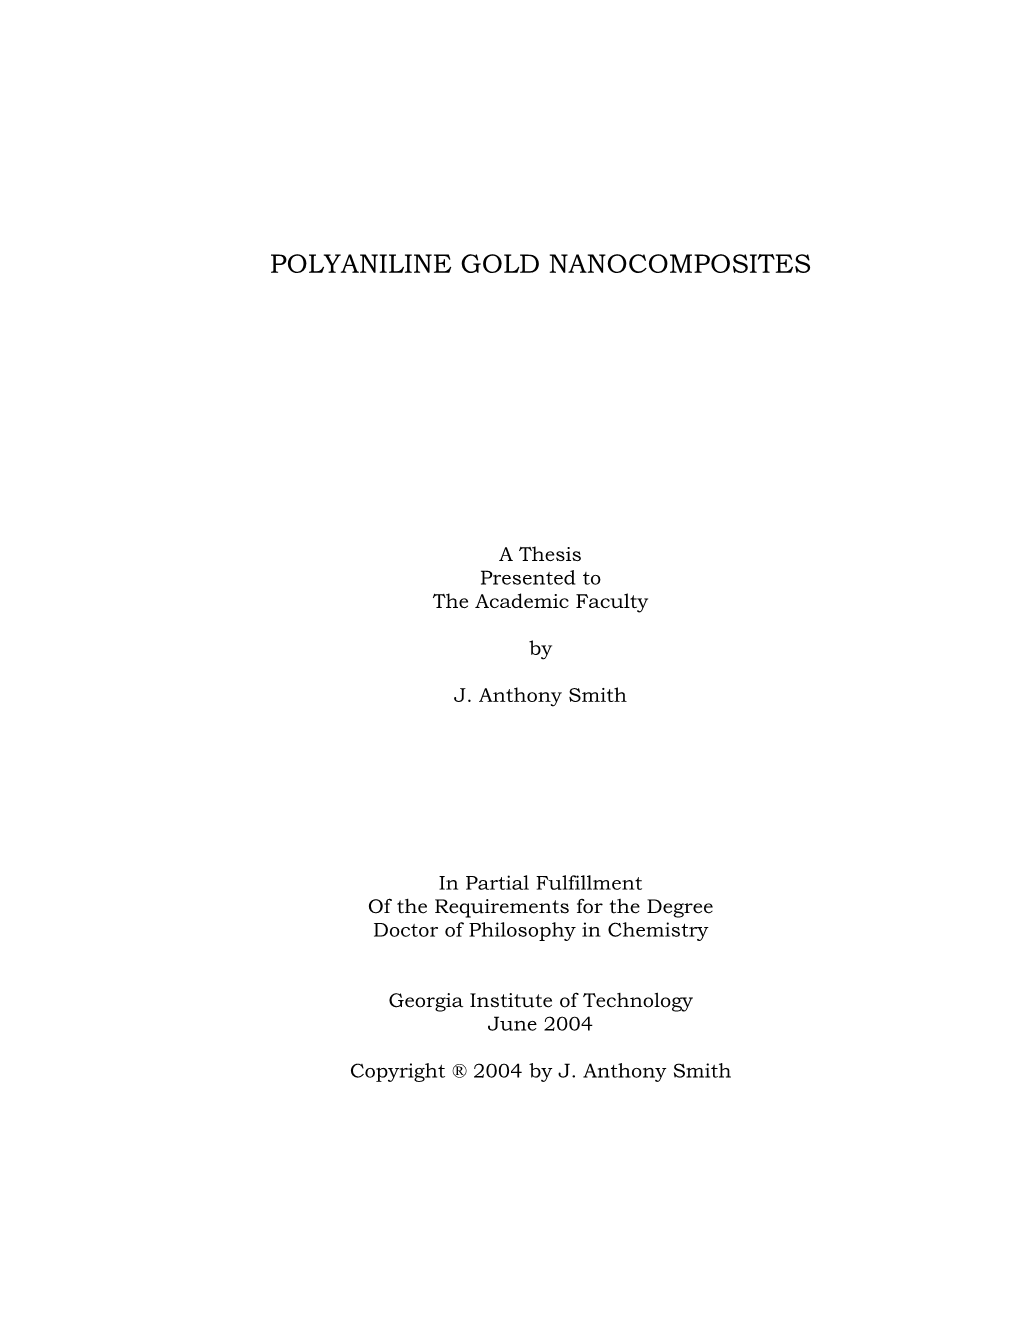 Polyaniline Gold Nanocomposites